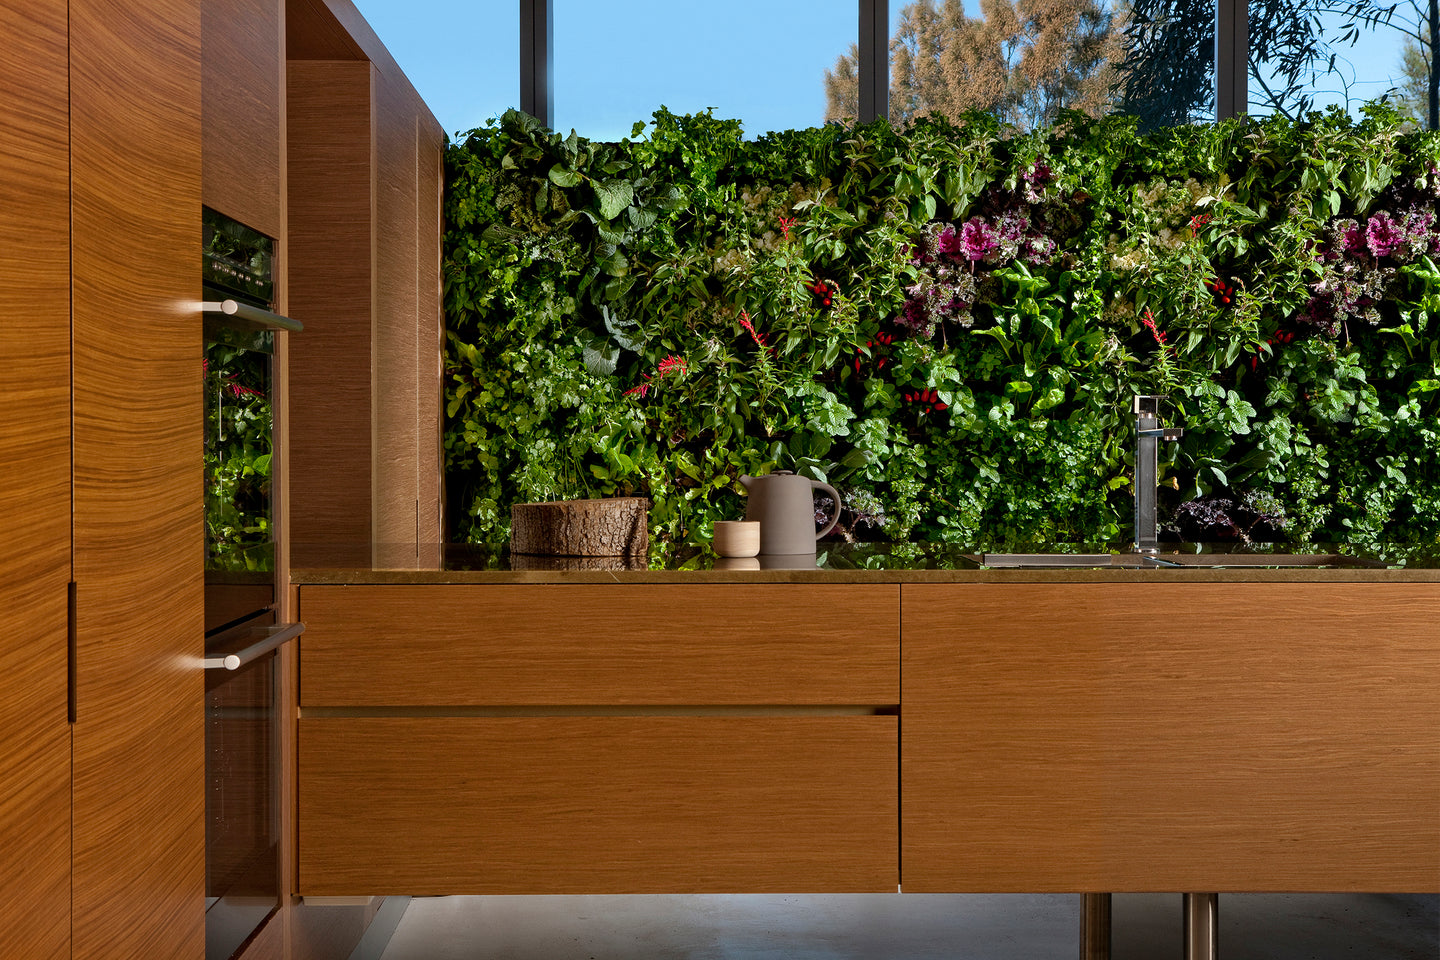 Vertical Herb Garden Wall by Greenwall Solutions using Green4Air vertical green wall system